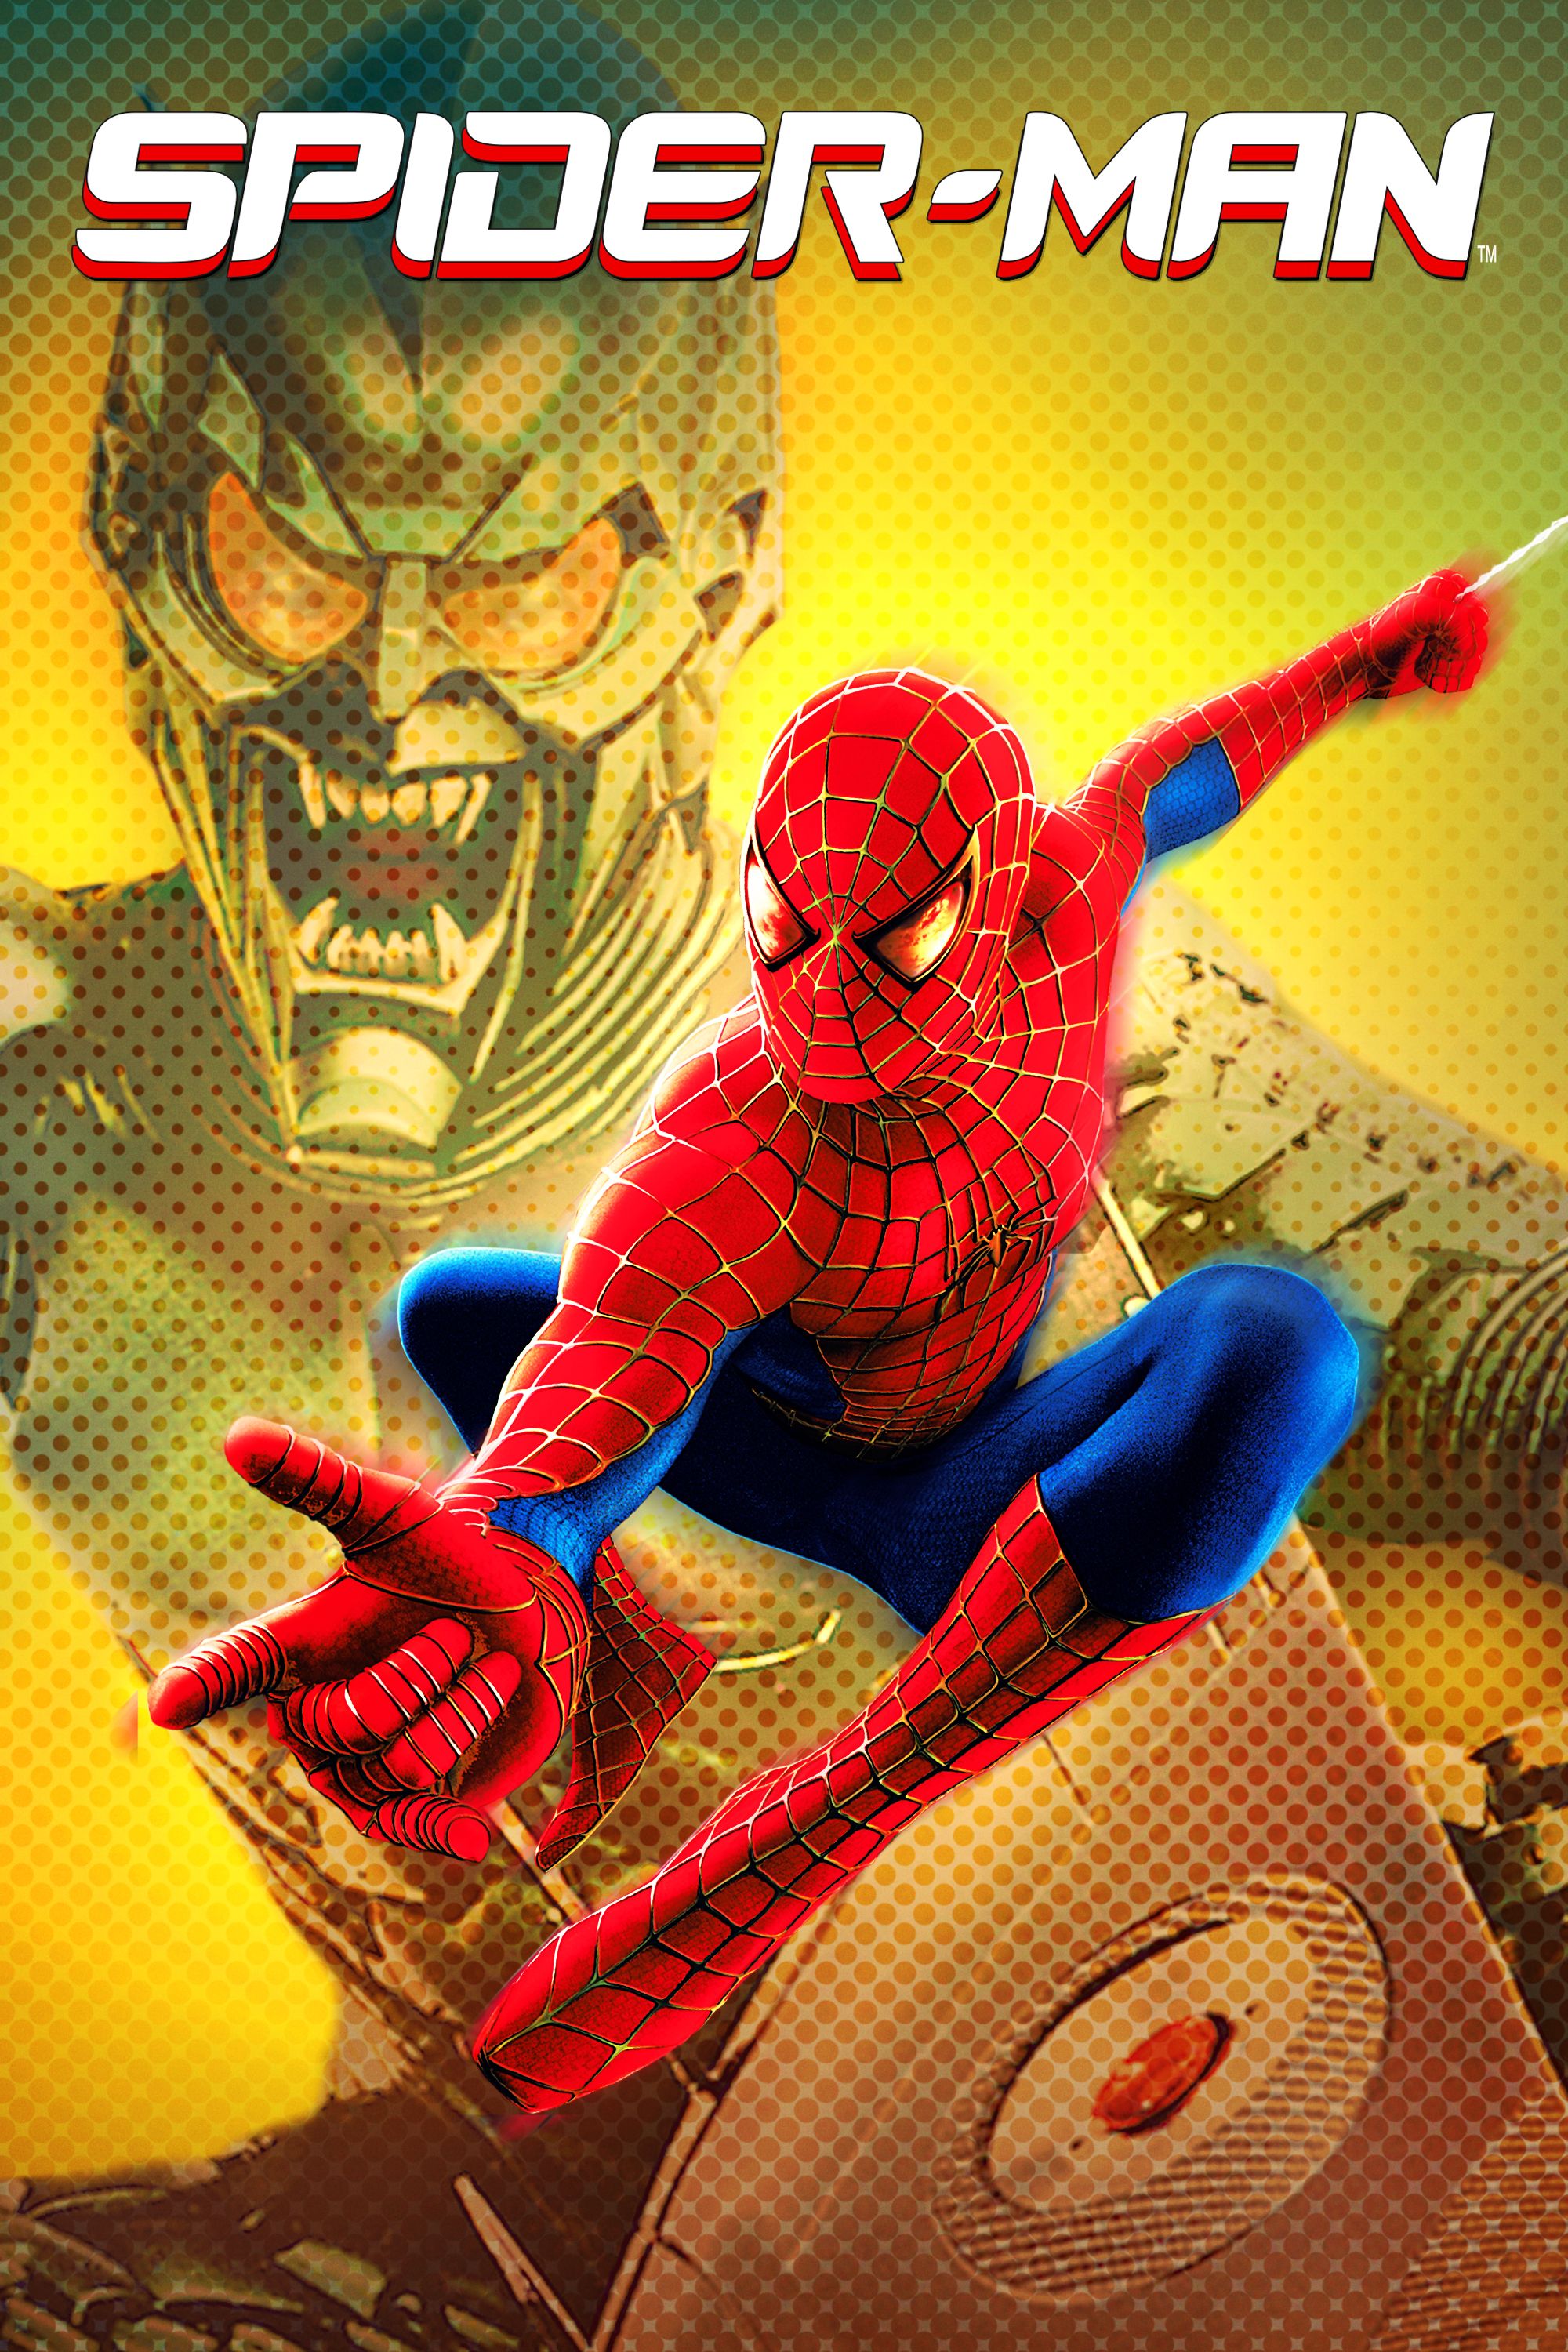 anthony decotis recommends Spiderman 1 Movie Online